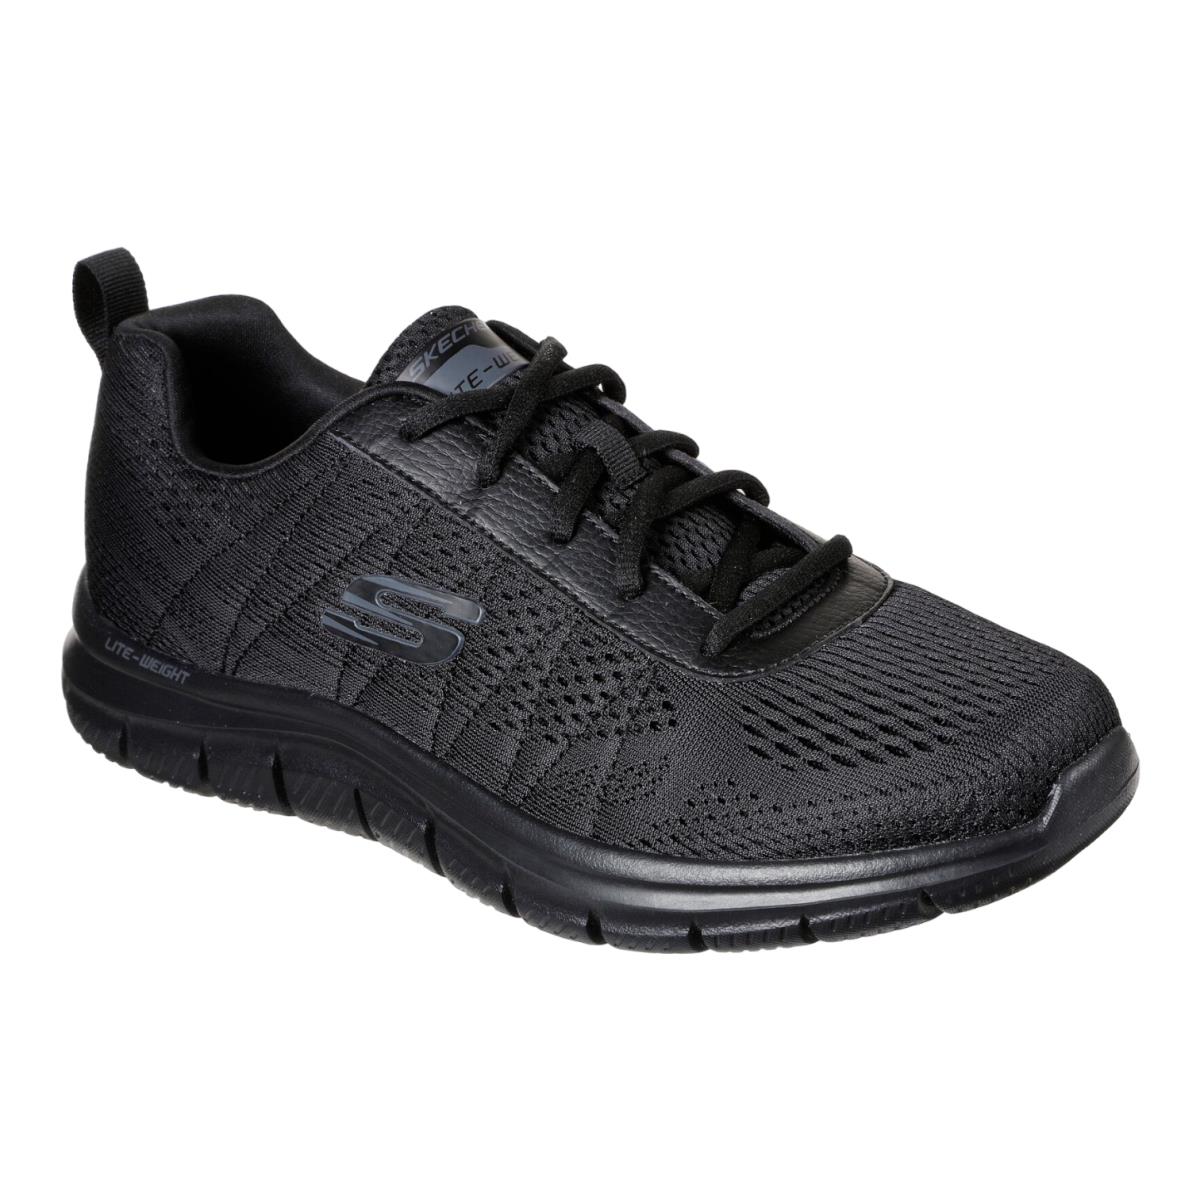 Mens Skechers Track Moulton Sneaker - Black Size 12 M US 232081/BBK - Black